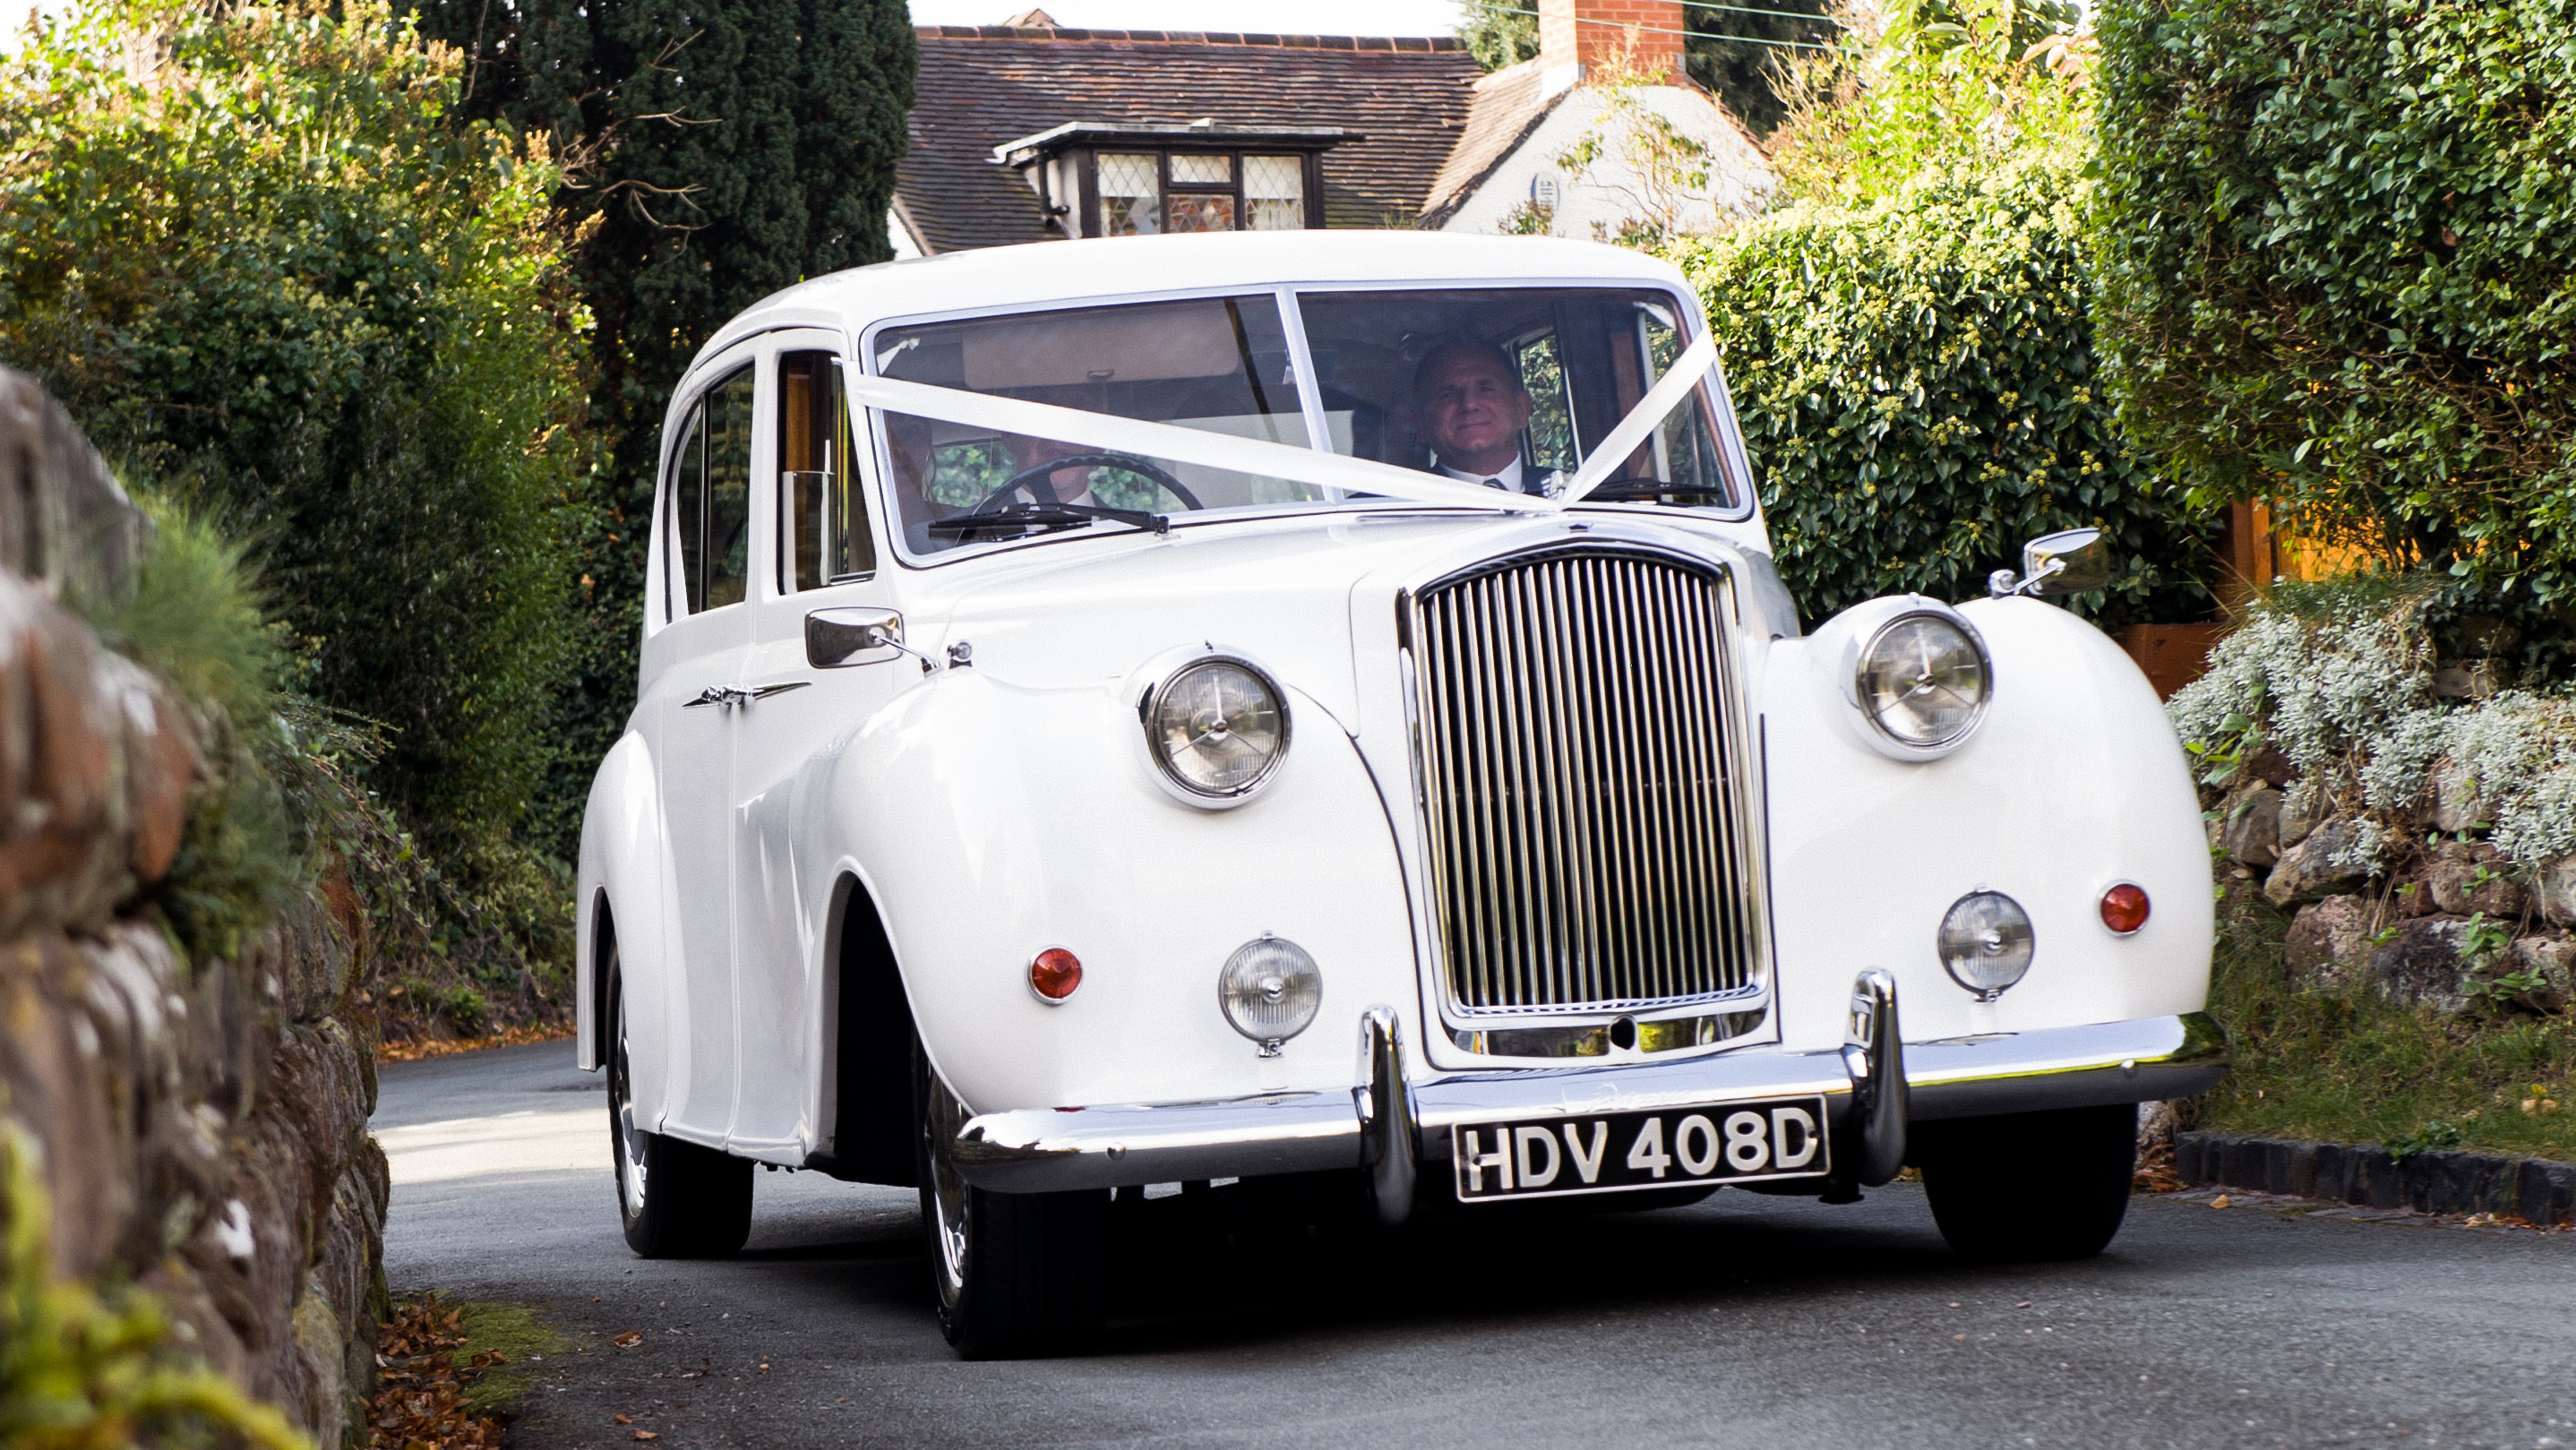 Austin Princess Vanden Plas Limousine wedding car for hire in Cannock, Staffordshire